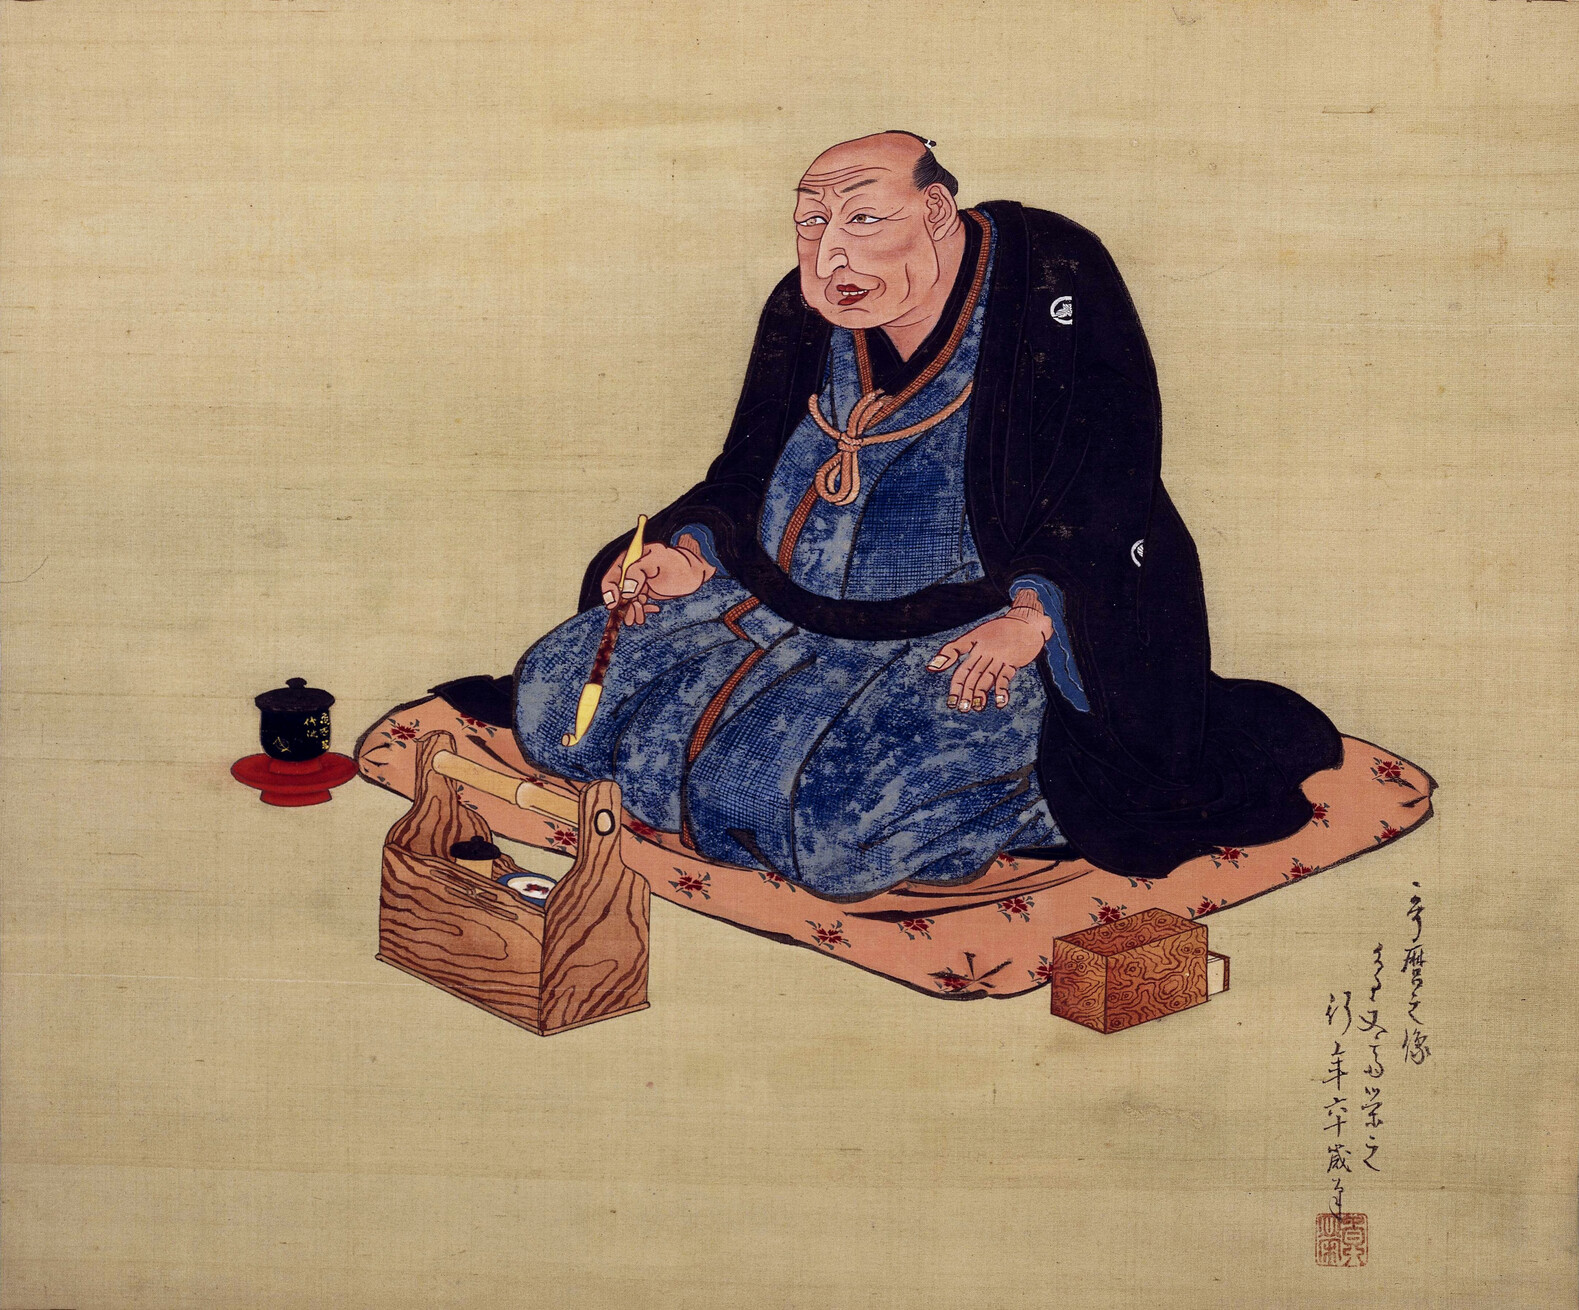 Portrait of Utamaro by Eishi, 1815